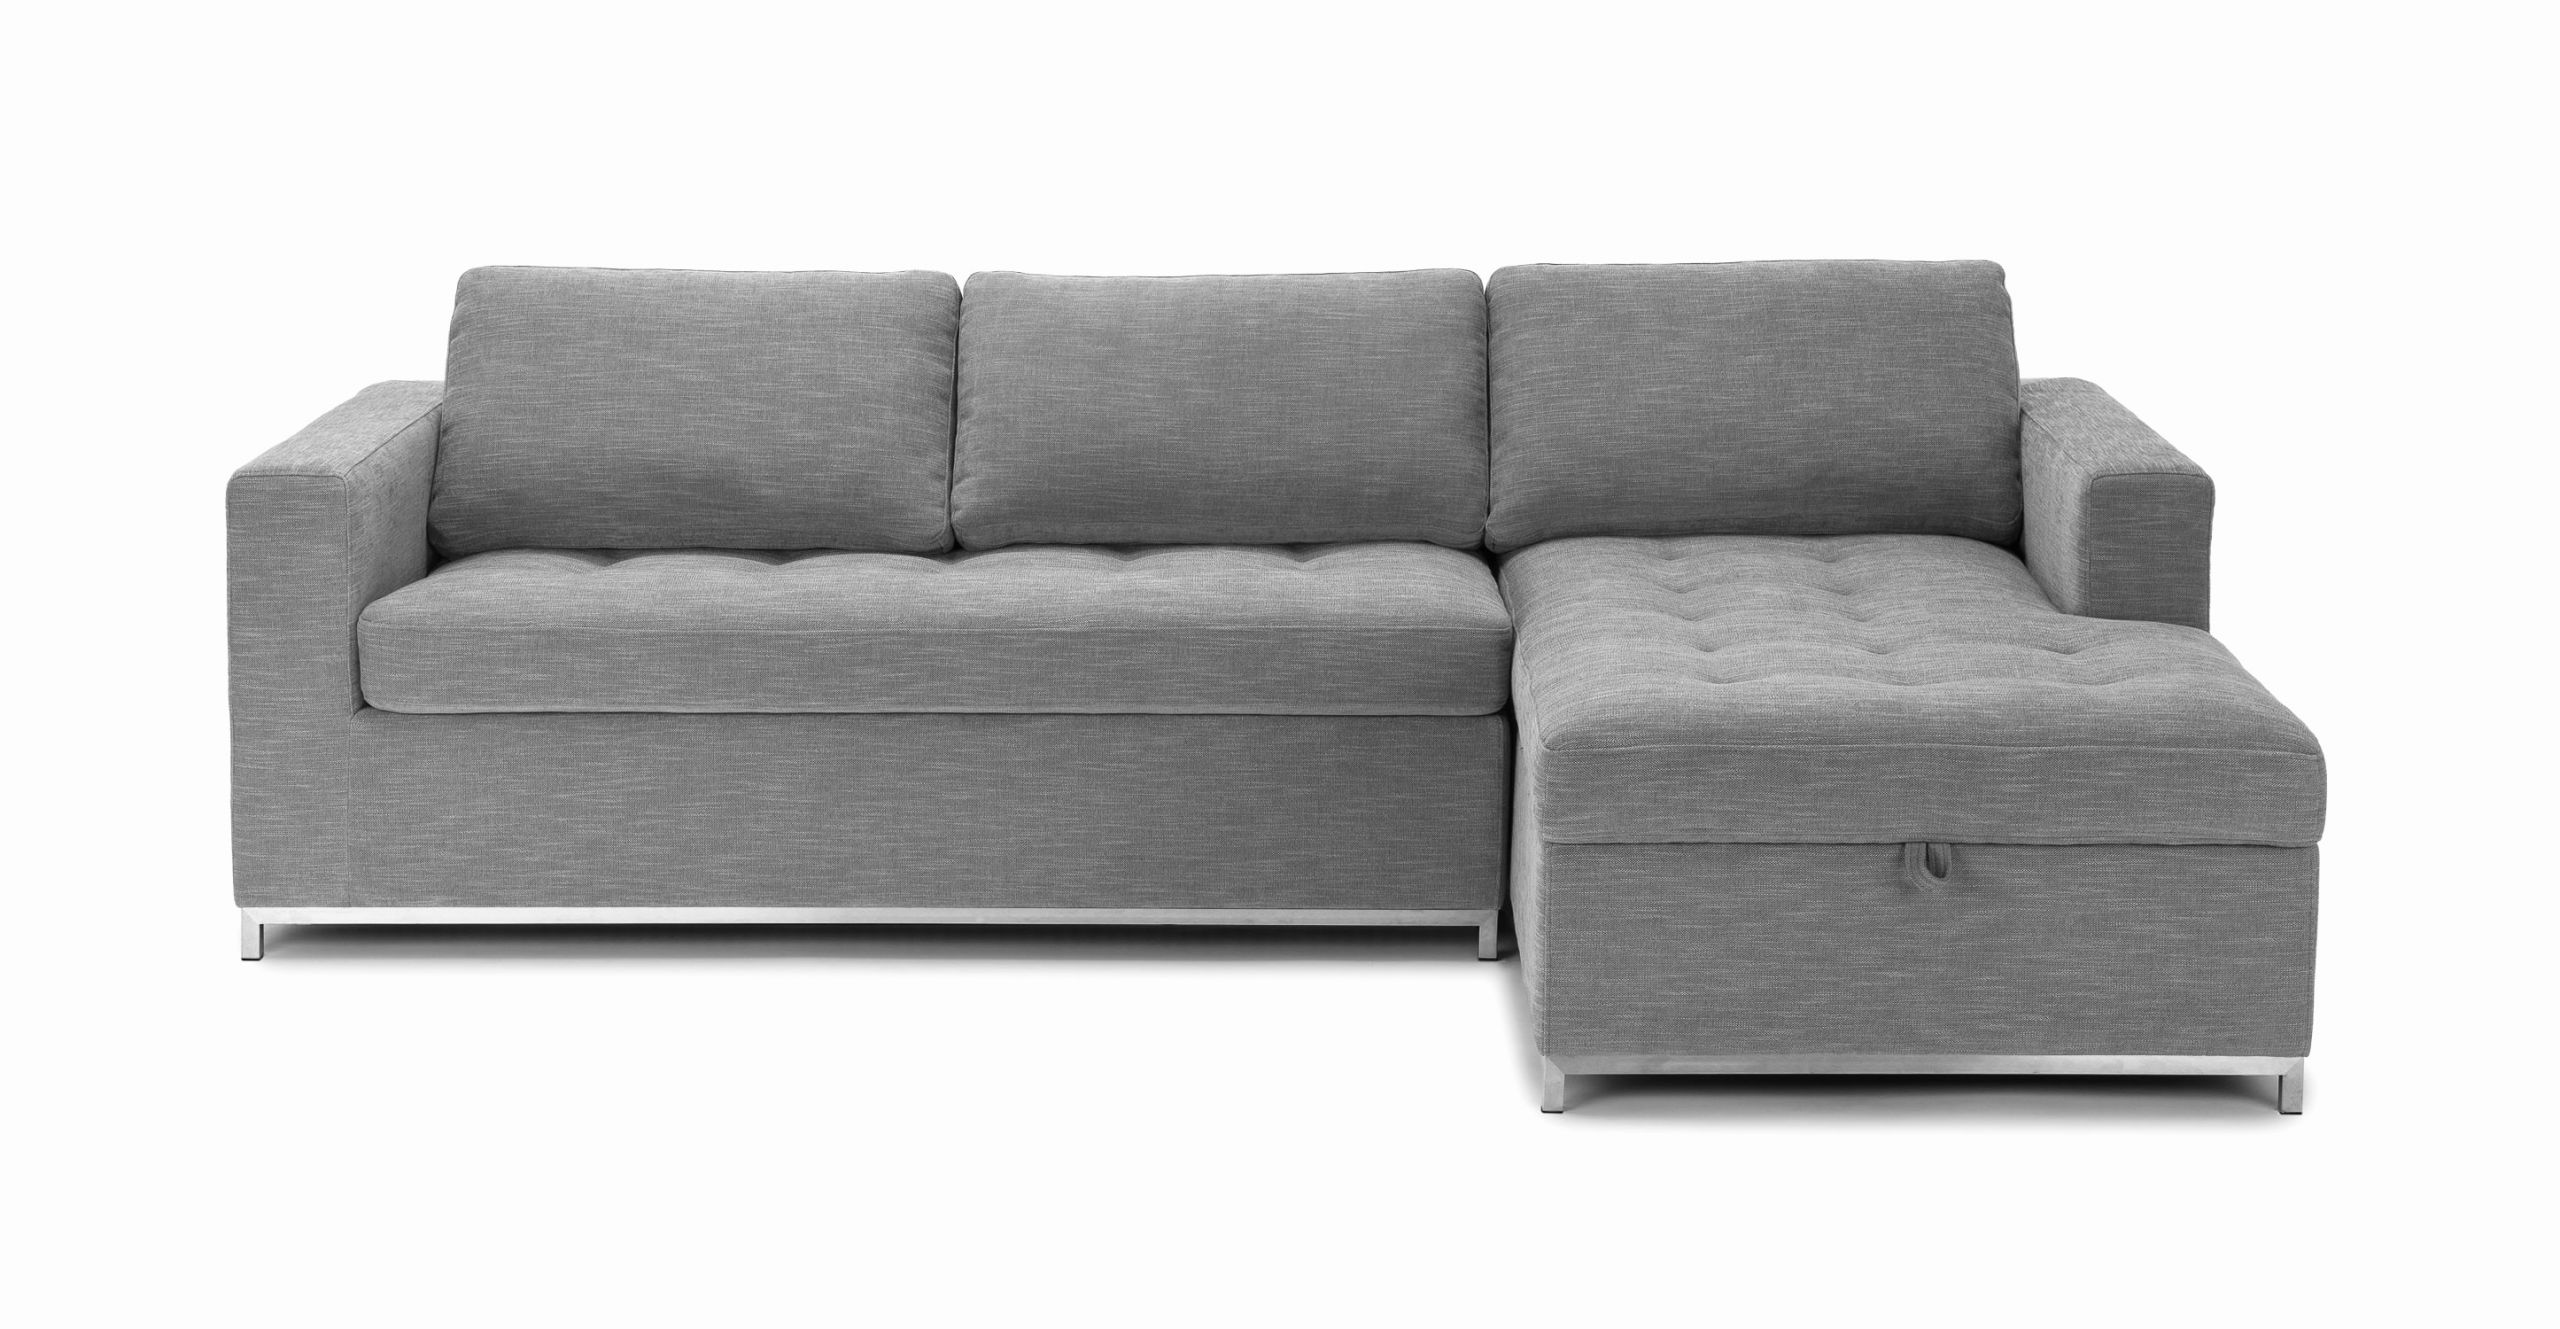 ikea ektorp 2 places inspirant image dimension clic clac nouveau sofa bed size beautiful 15 elegant ikea of ikea ektorp 2 places